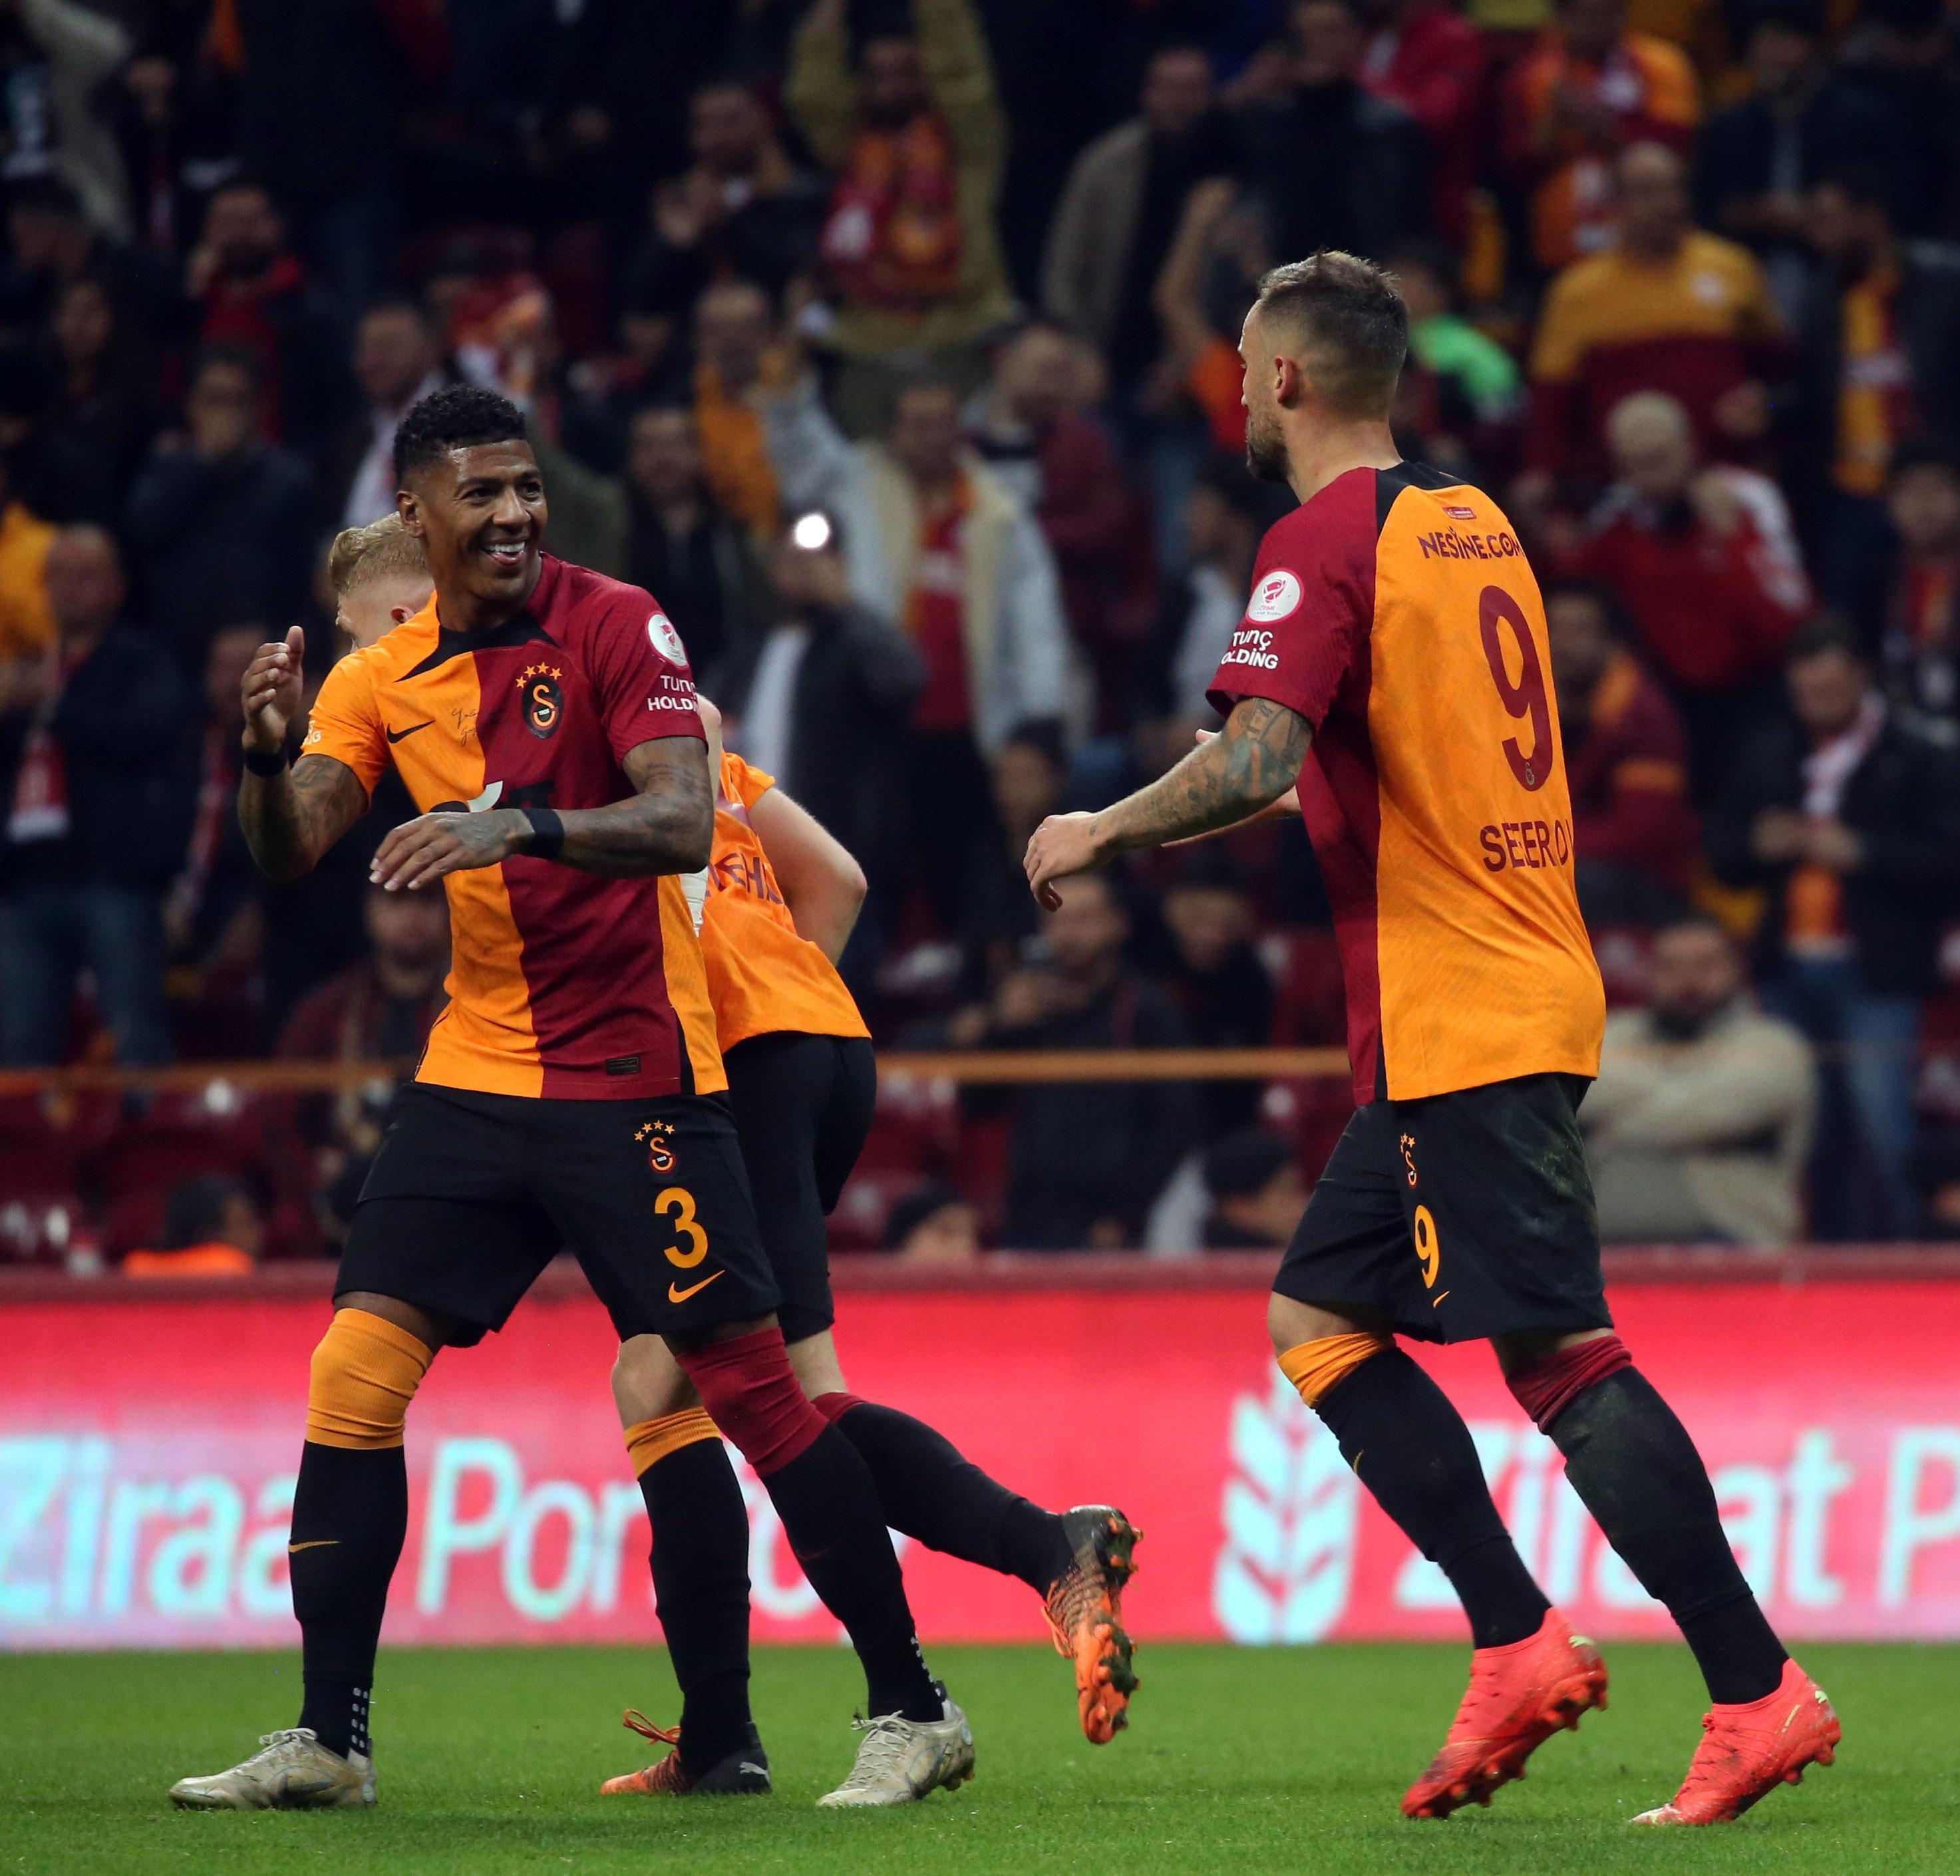 (ÖZET) Galatasaray-Ofspor maç sonucu: 2-1